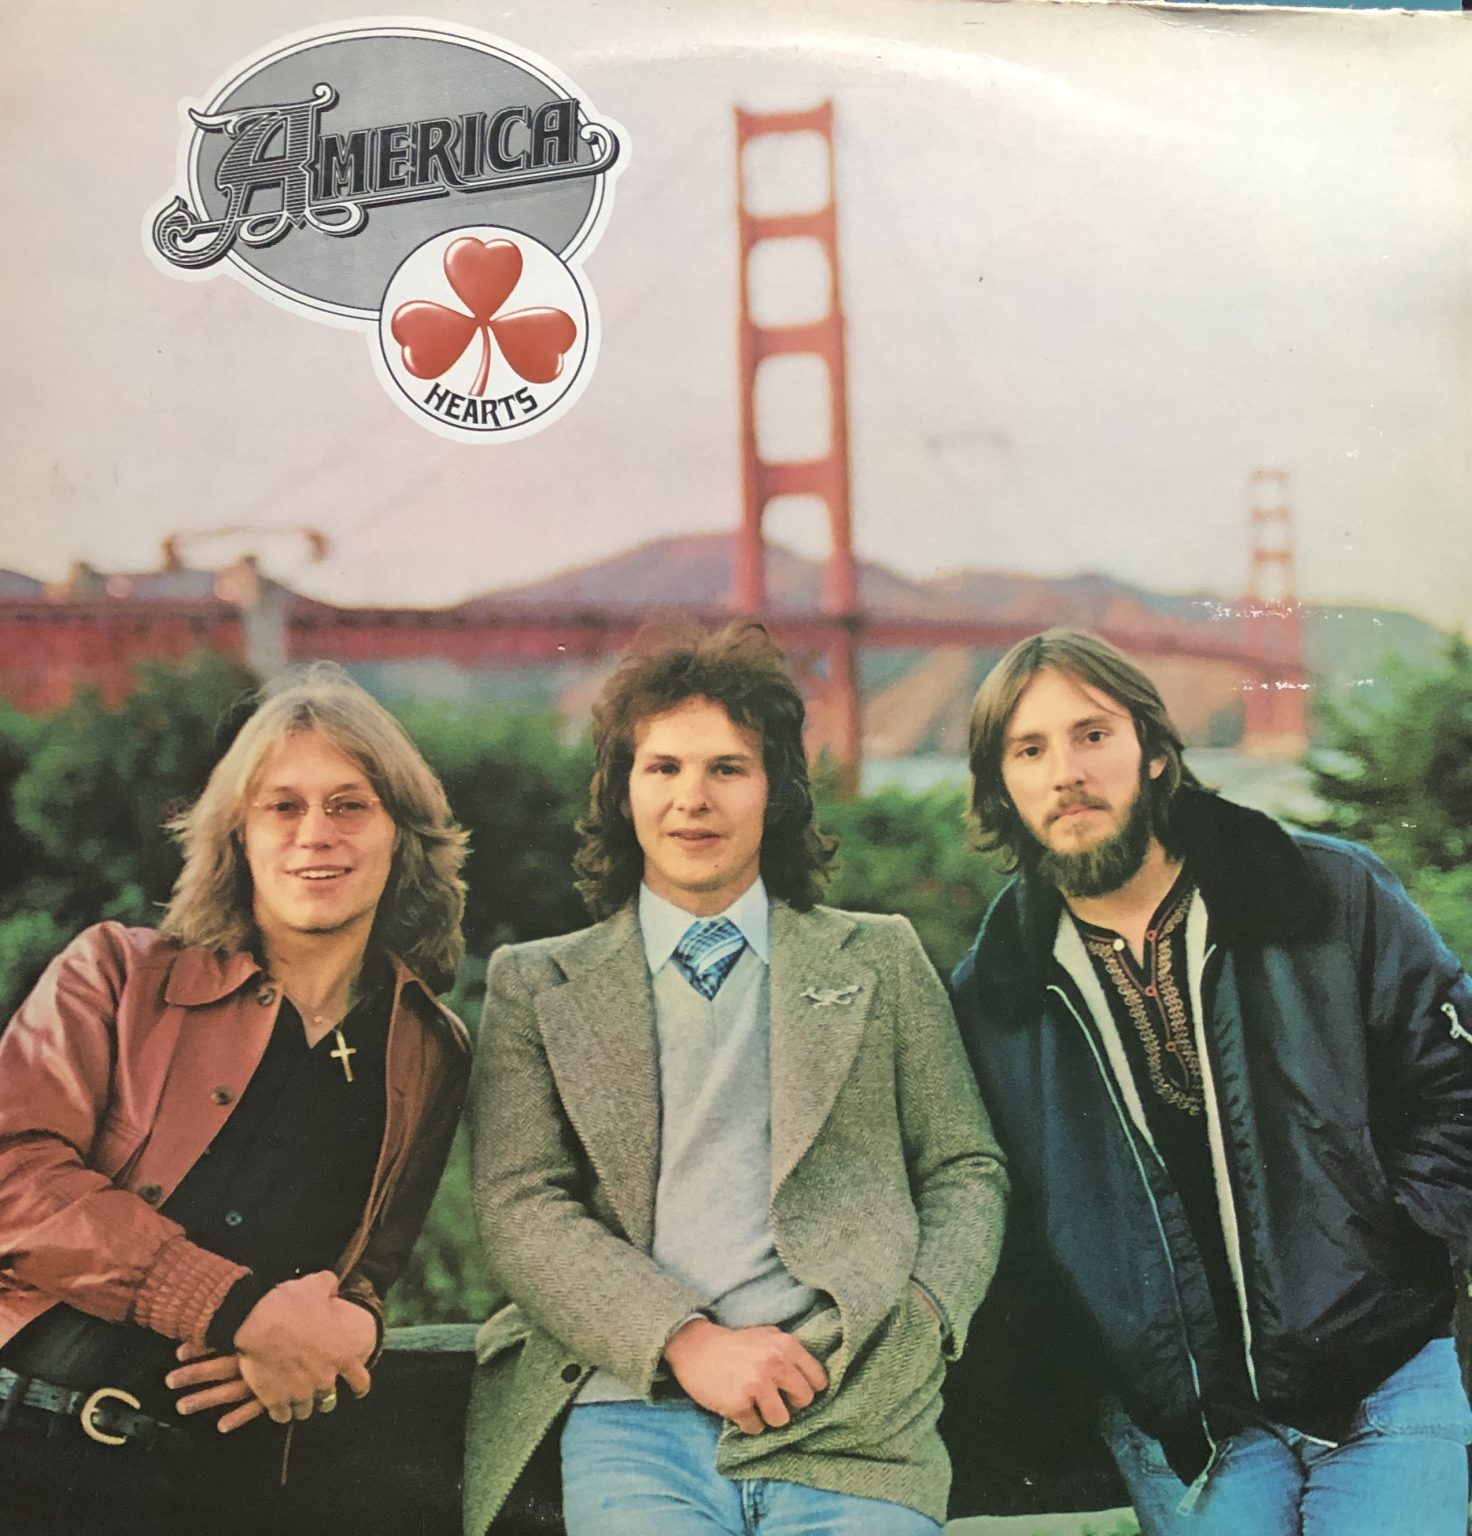 America – Hearts LP